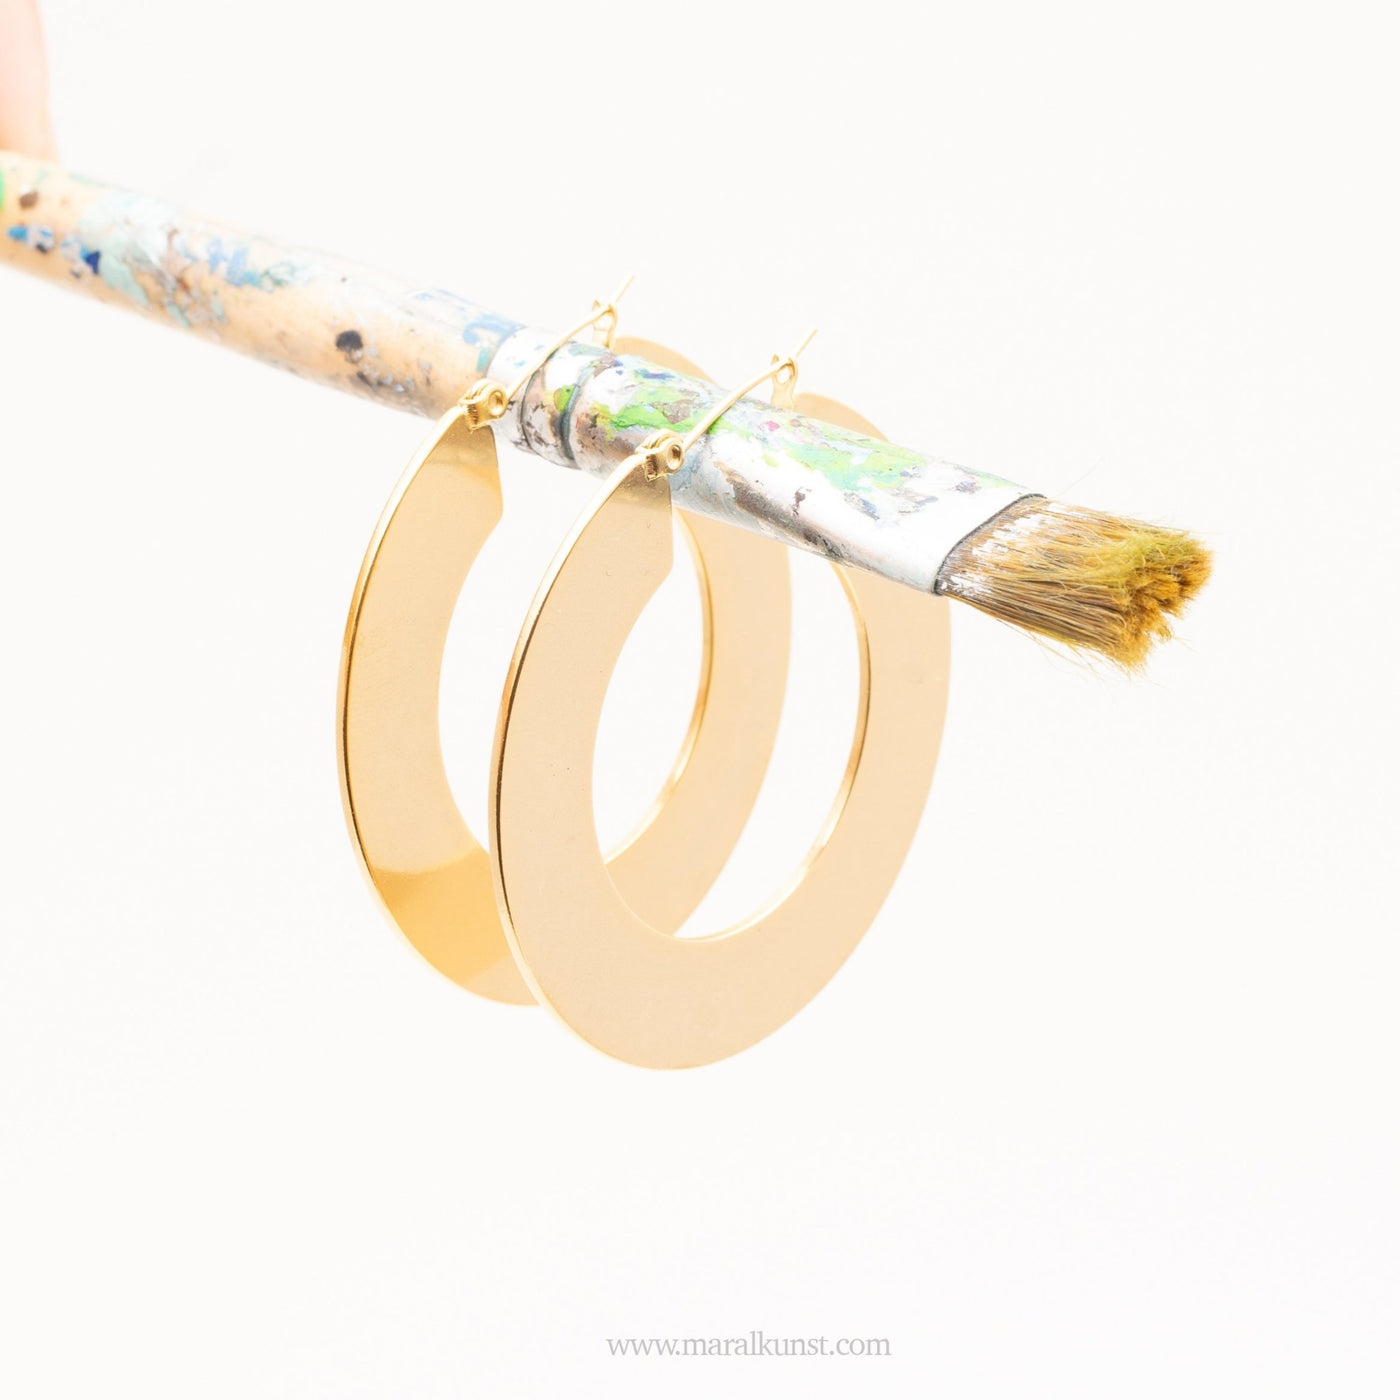 Ariana Earrings - Maral Kunst Jewelry